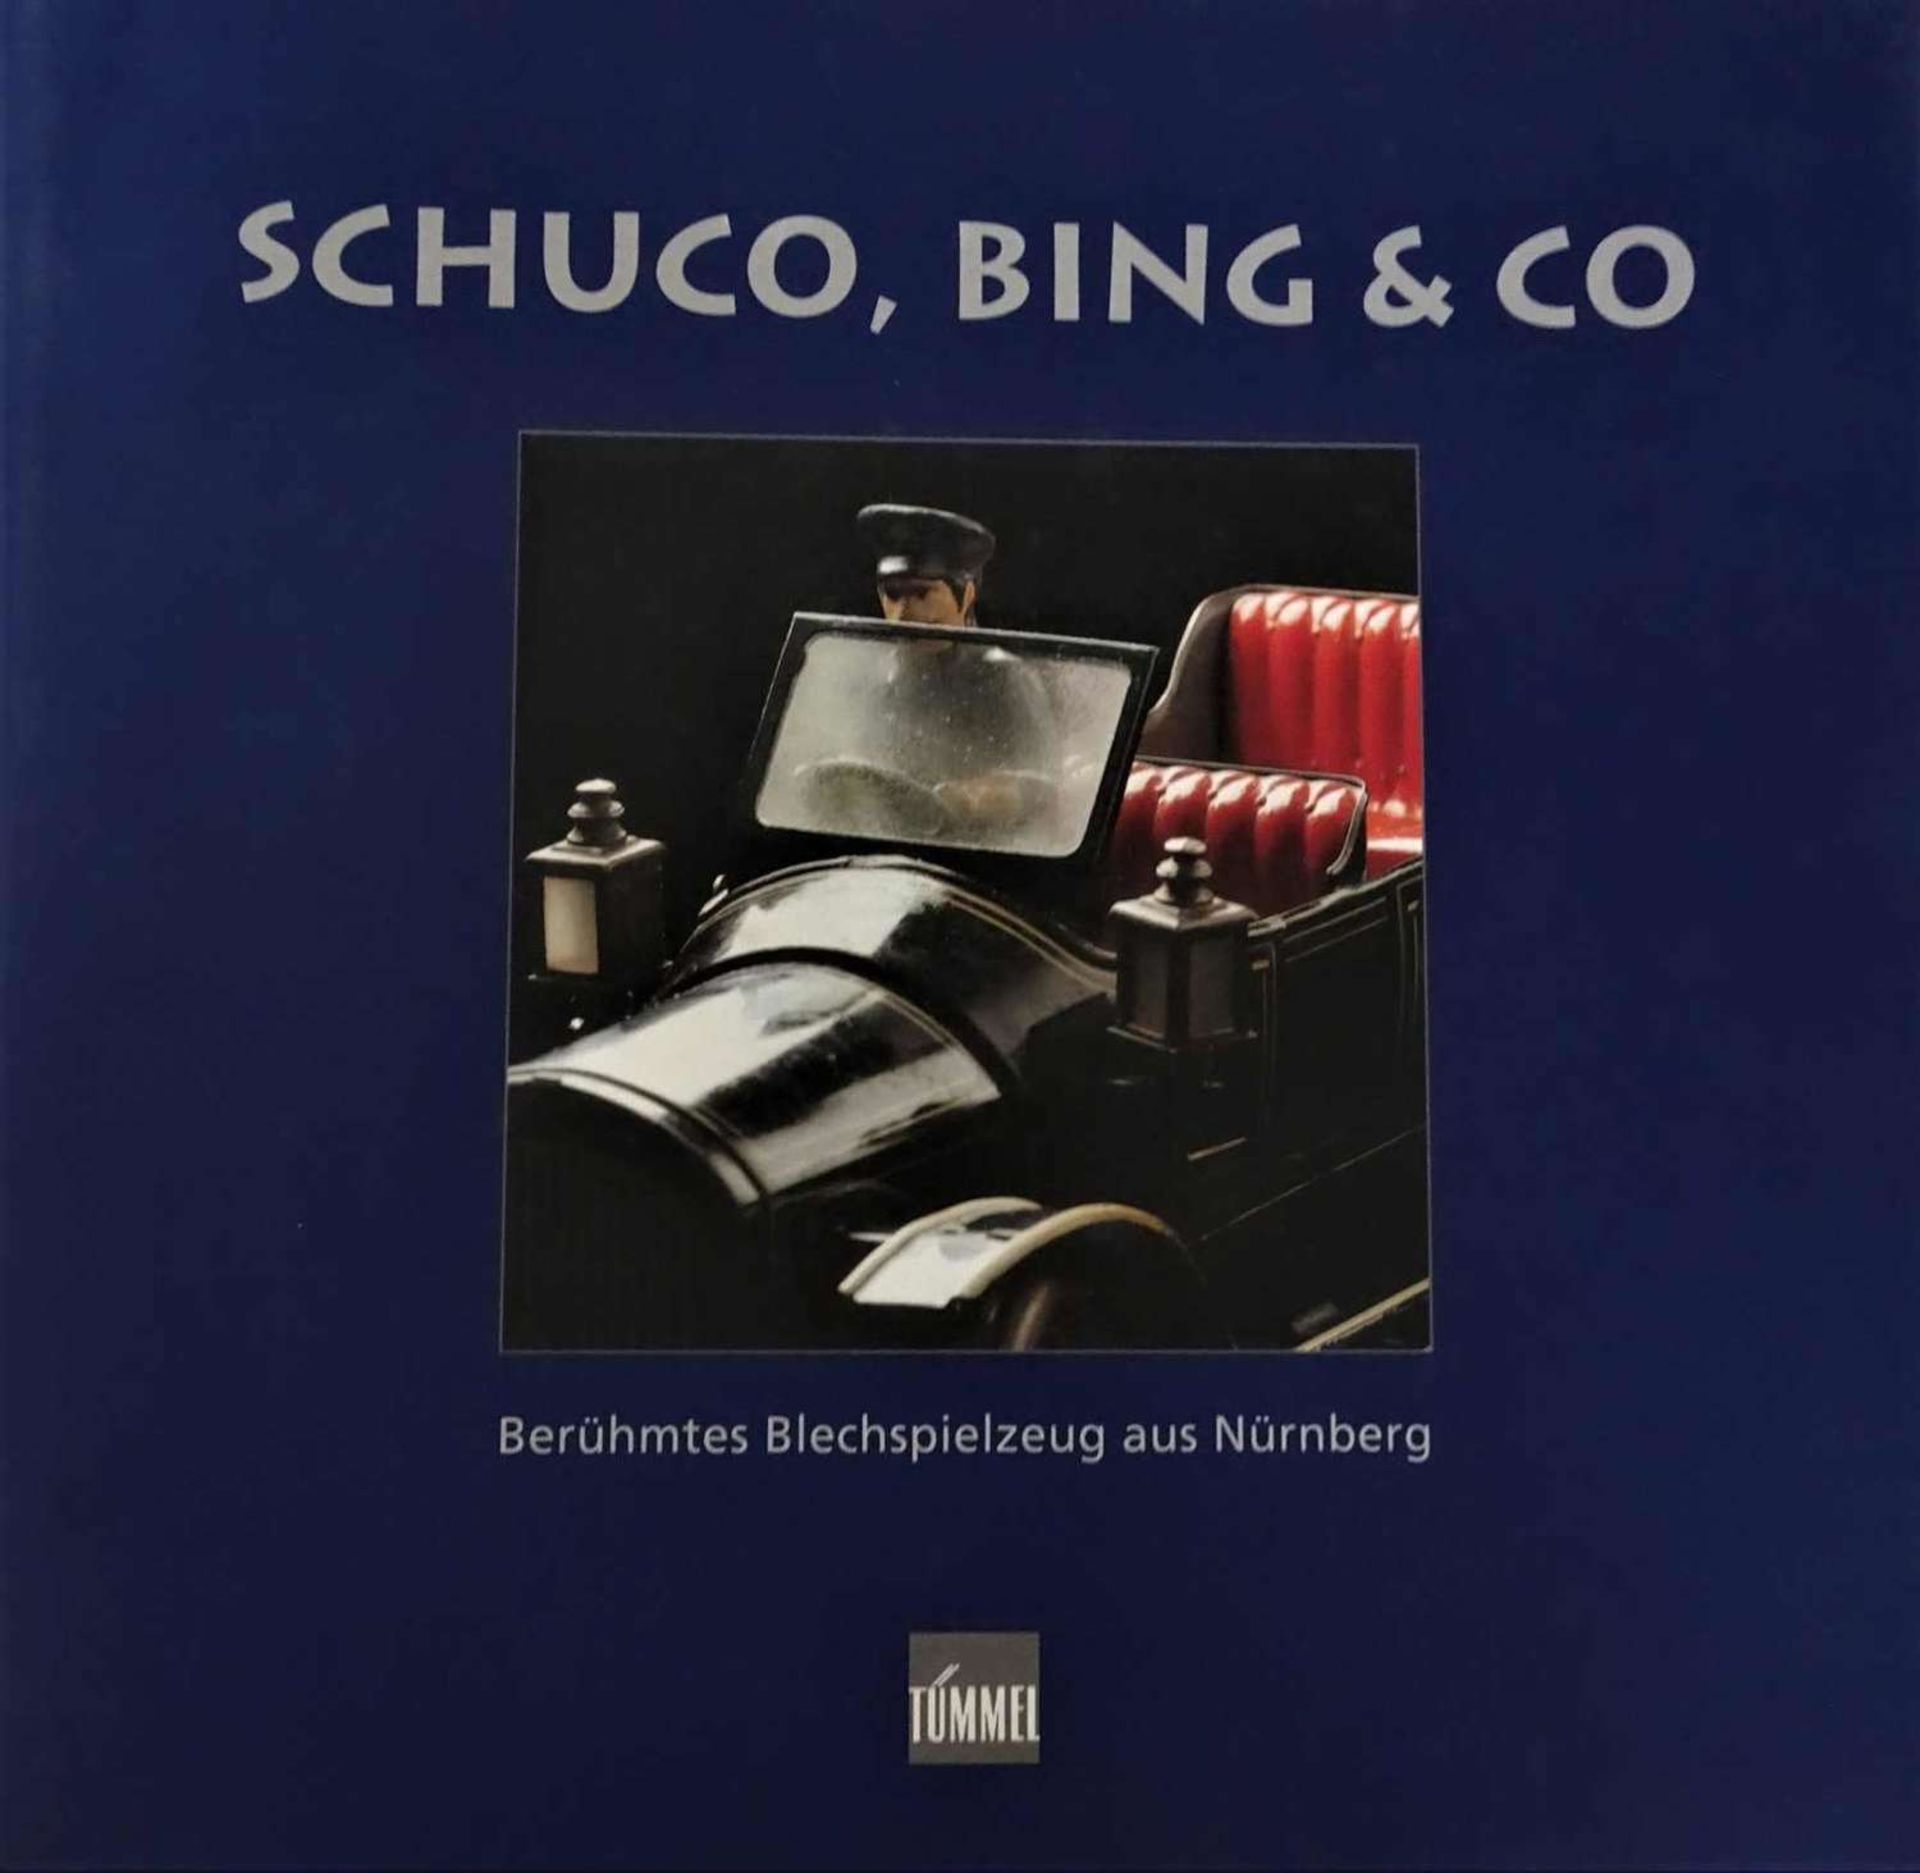 SCHUCO, Bing & Co. "Berühmtes Blechspielzeug aus Nürnberg", W. Tümmels, Nürnberg, ISBN 3-921590-15-